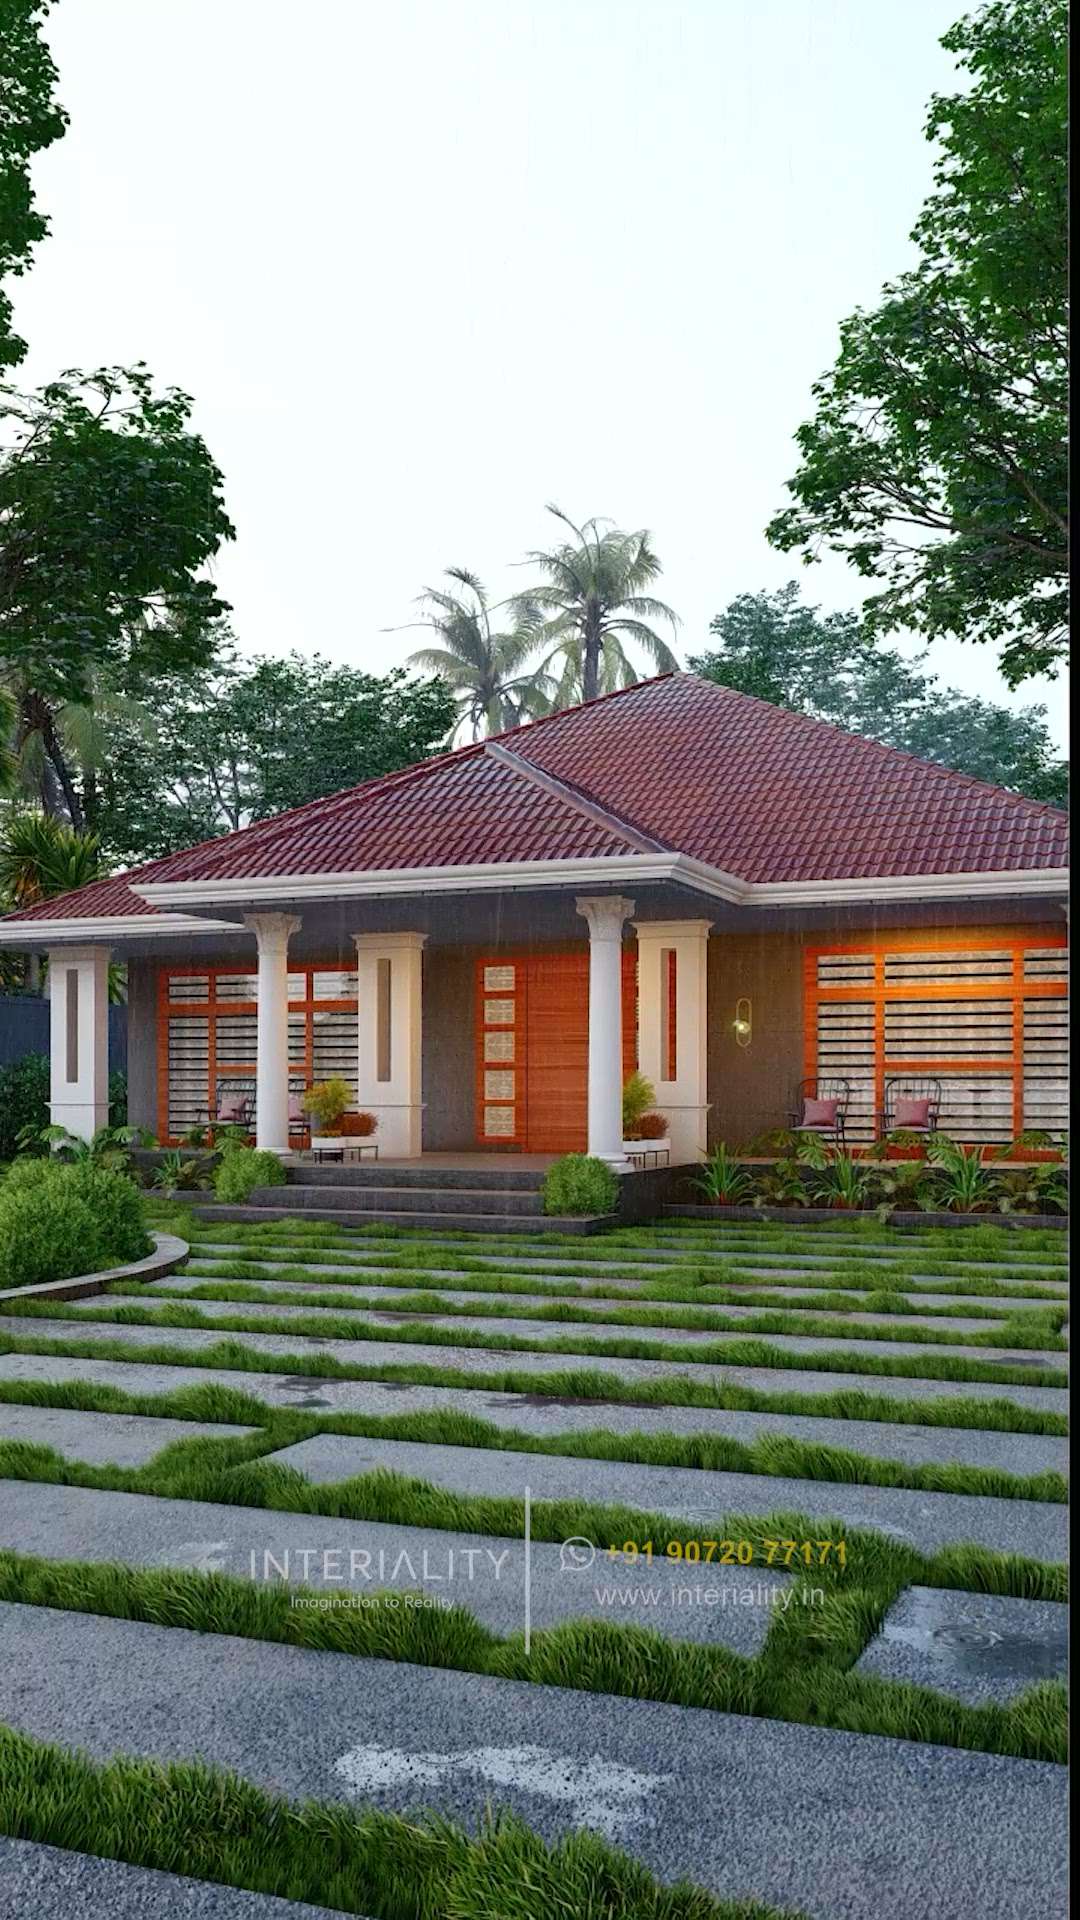 3D Home Visualization

Doing Online Design
▶️Planning
▶️Exterior Design
▶️Interior Design
▶️Landscape Design

Whatsapp: +91 90720 77171

#keralaarchitecture #keralahomeplanners #keralahomedesign #3dhomedesign #keralahouse #indianarchitecture